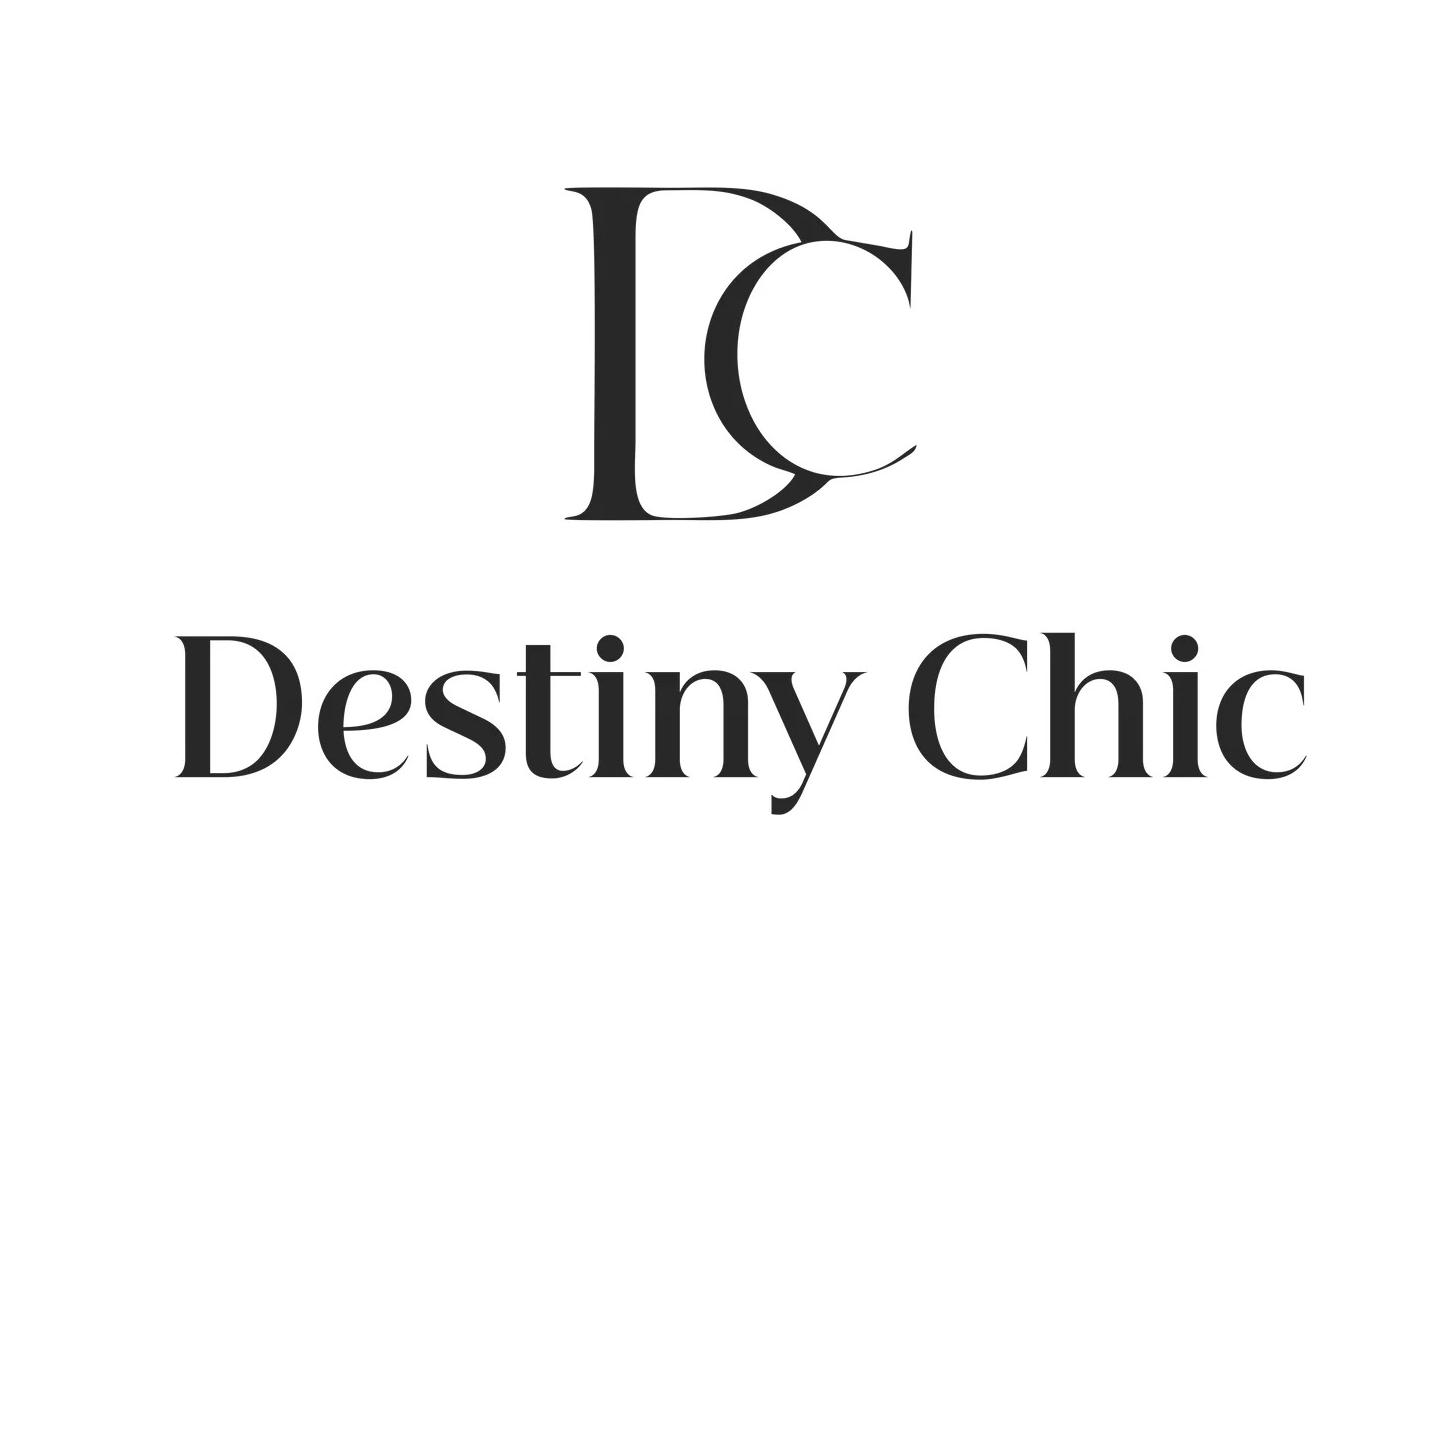 Destiny Chic